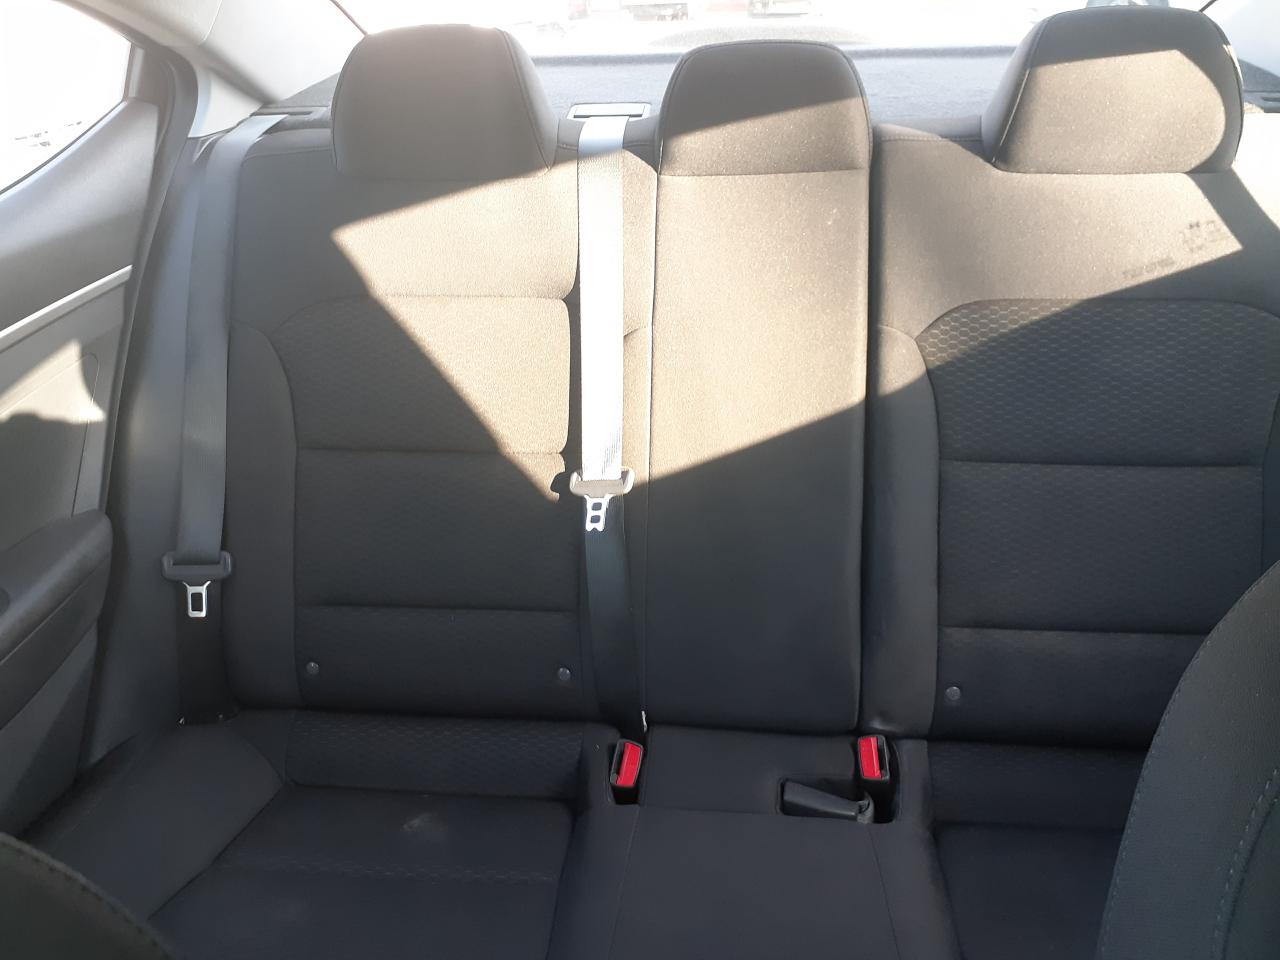 2020 Hyundai Elantra Essential, BU Cam, Heated Seats, Remote Start - Photo #14